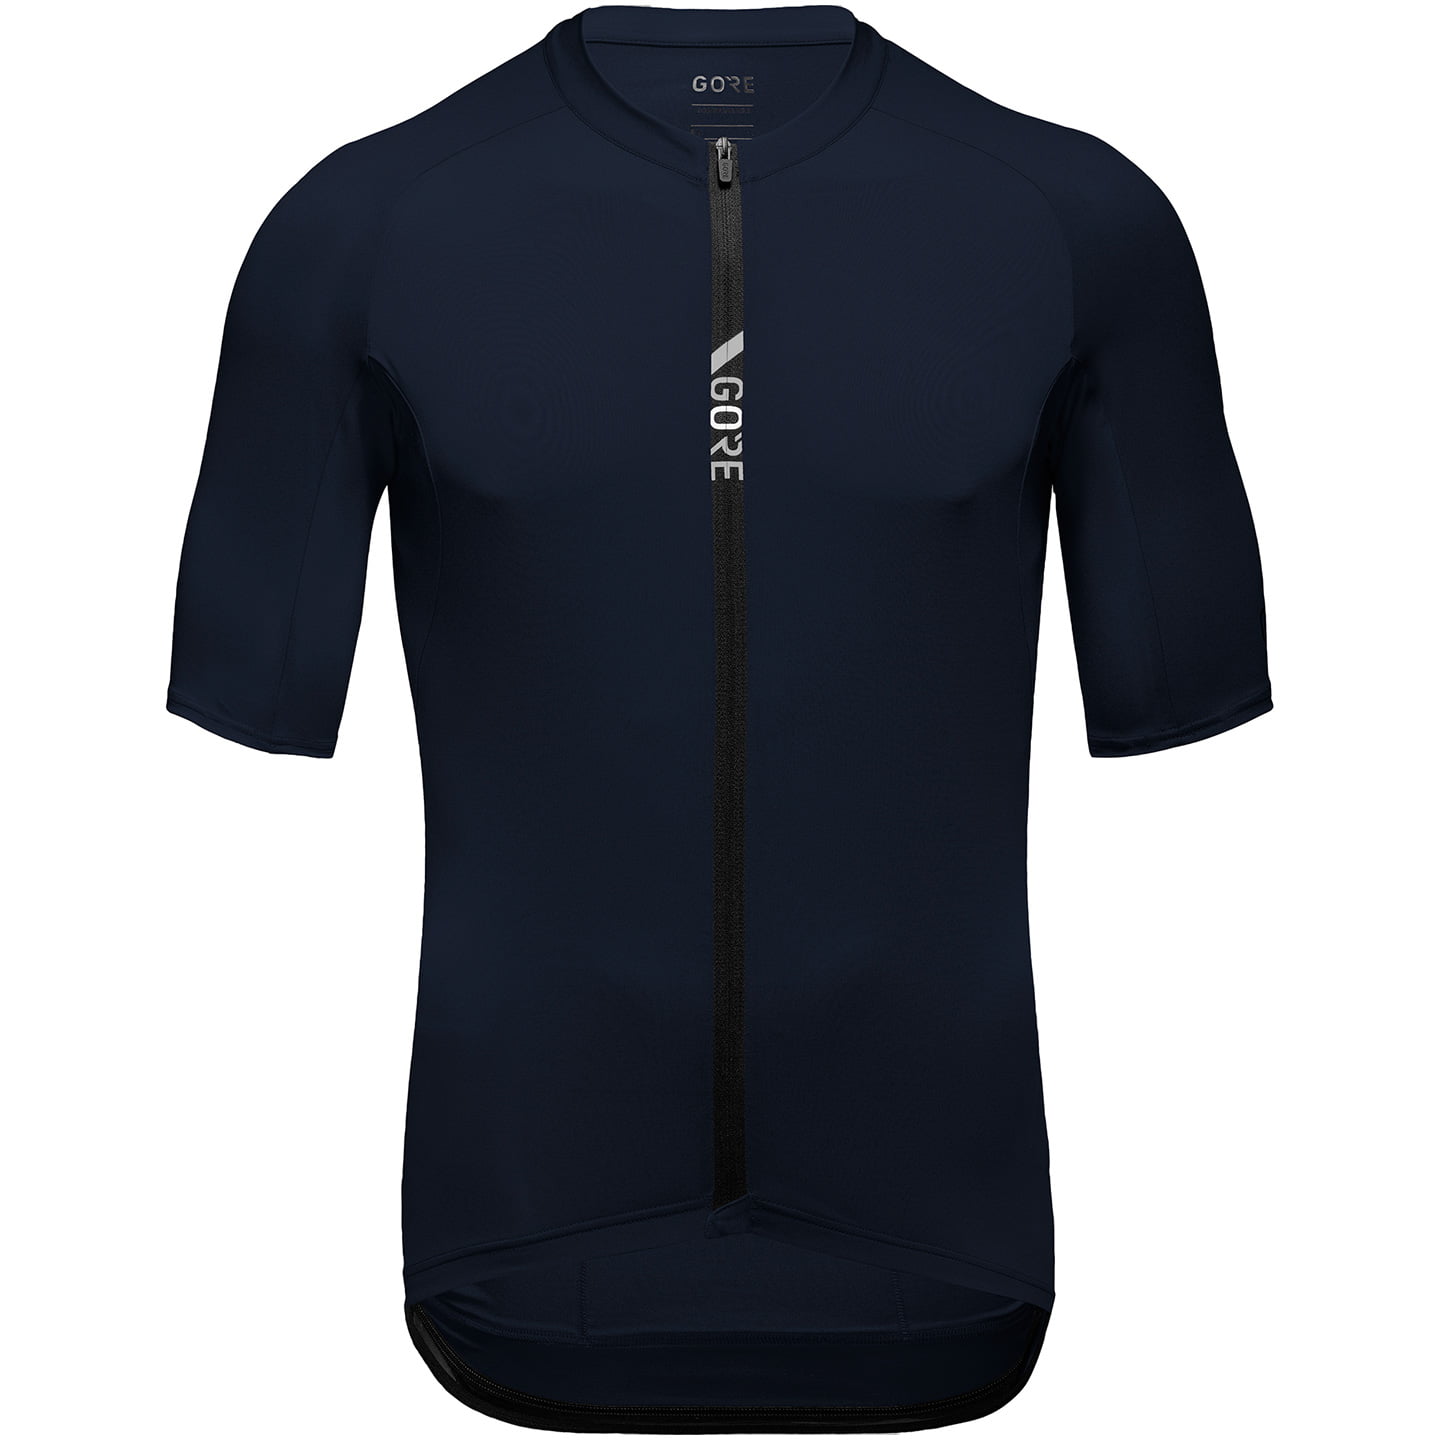 GORE WEAR Torrent Short Sleeve Jersey Short Sleeve Jersey, for men, size L, Cycling jersey, Cycling clothing